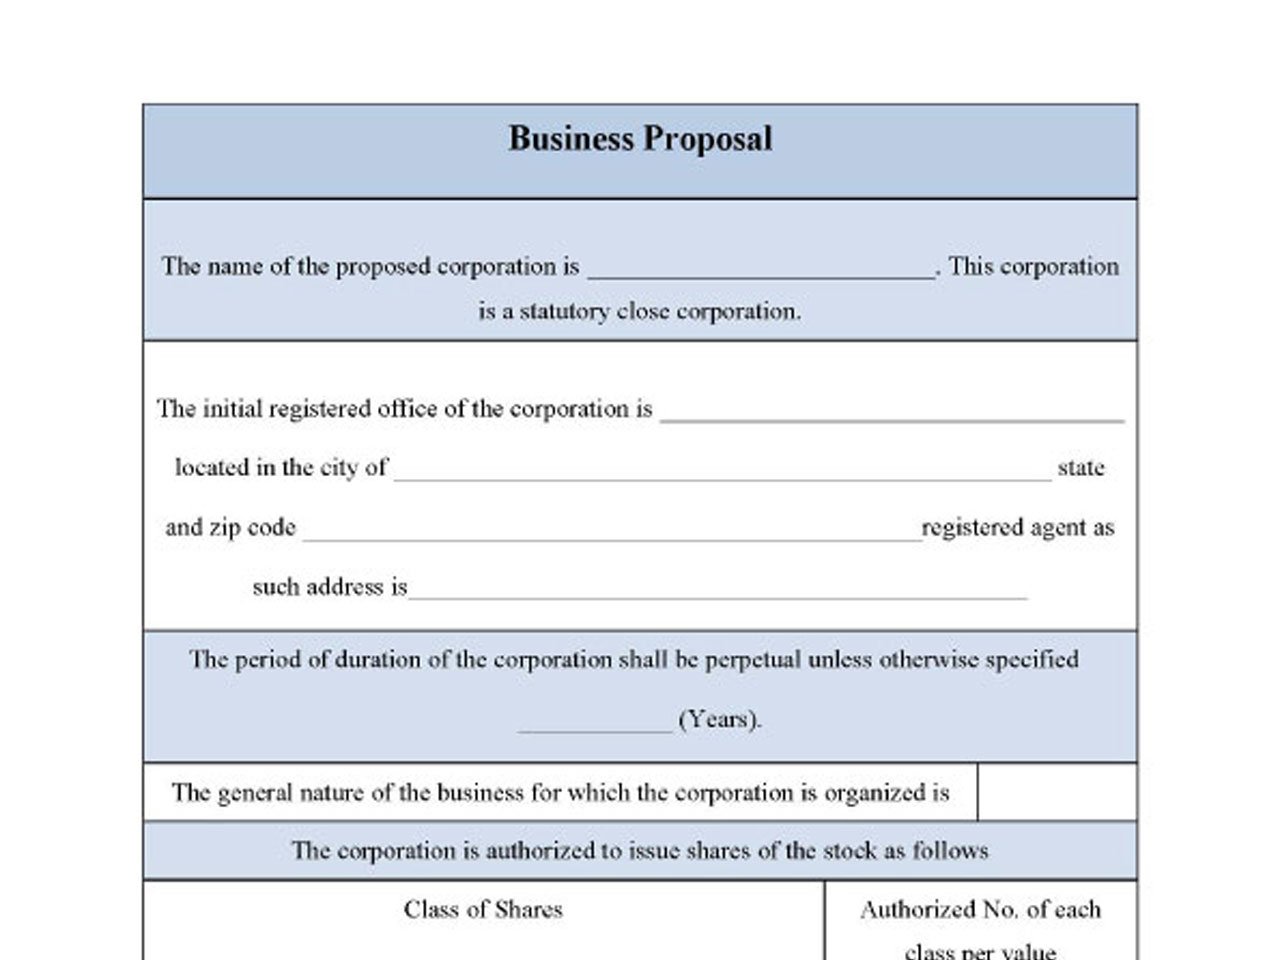 Sample Business Proposal Form